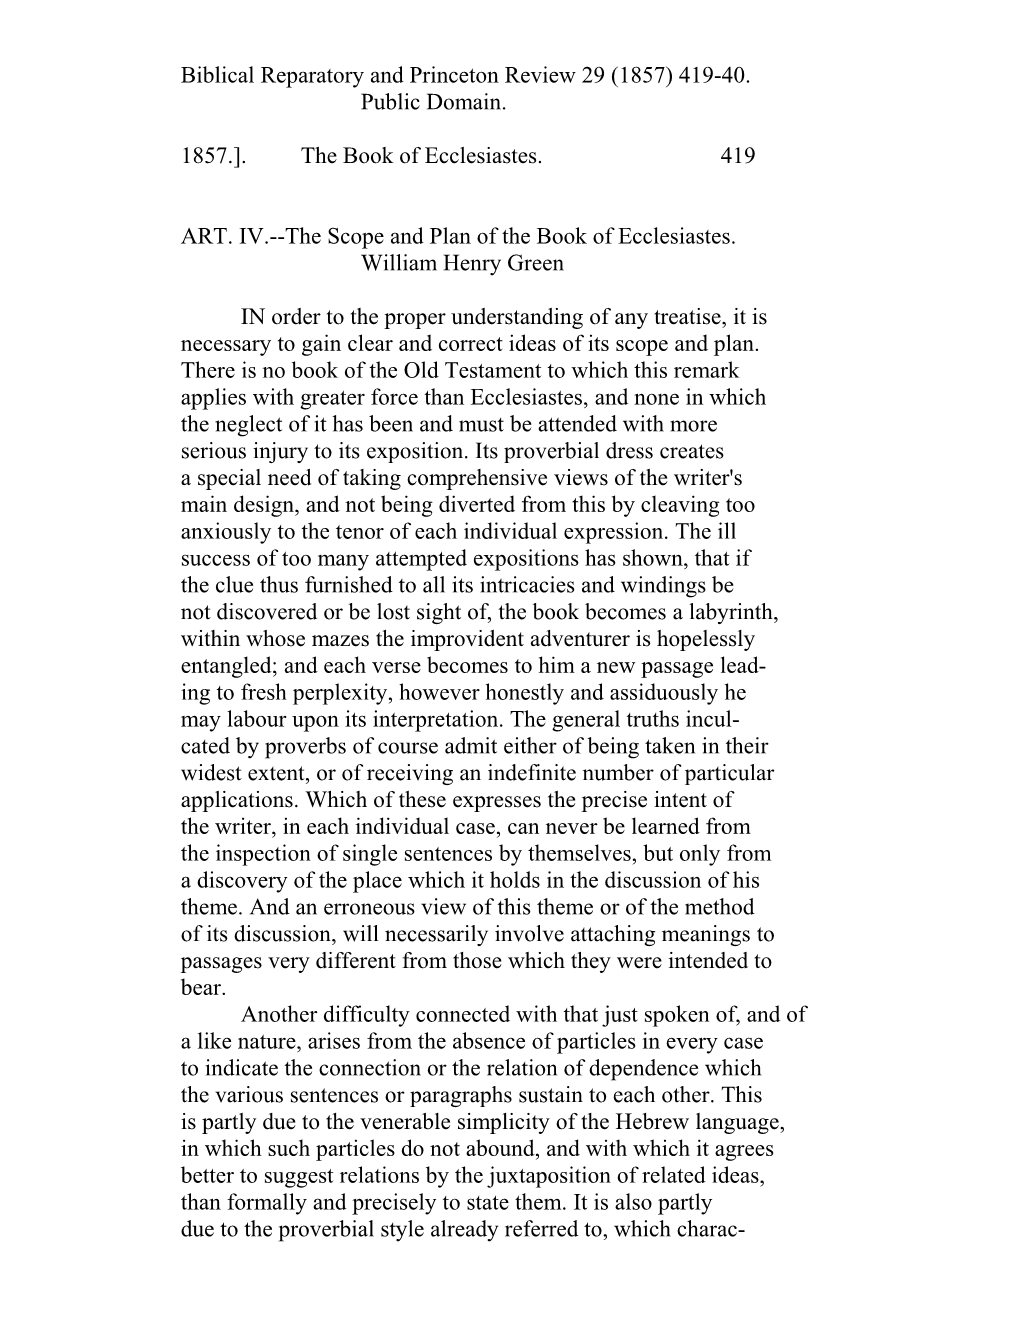 Biblical Reparatory and Princeton Review 29 (1957) 419-40